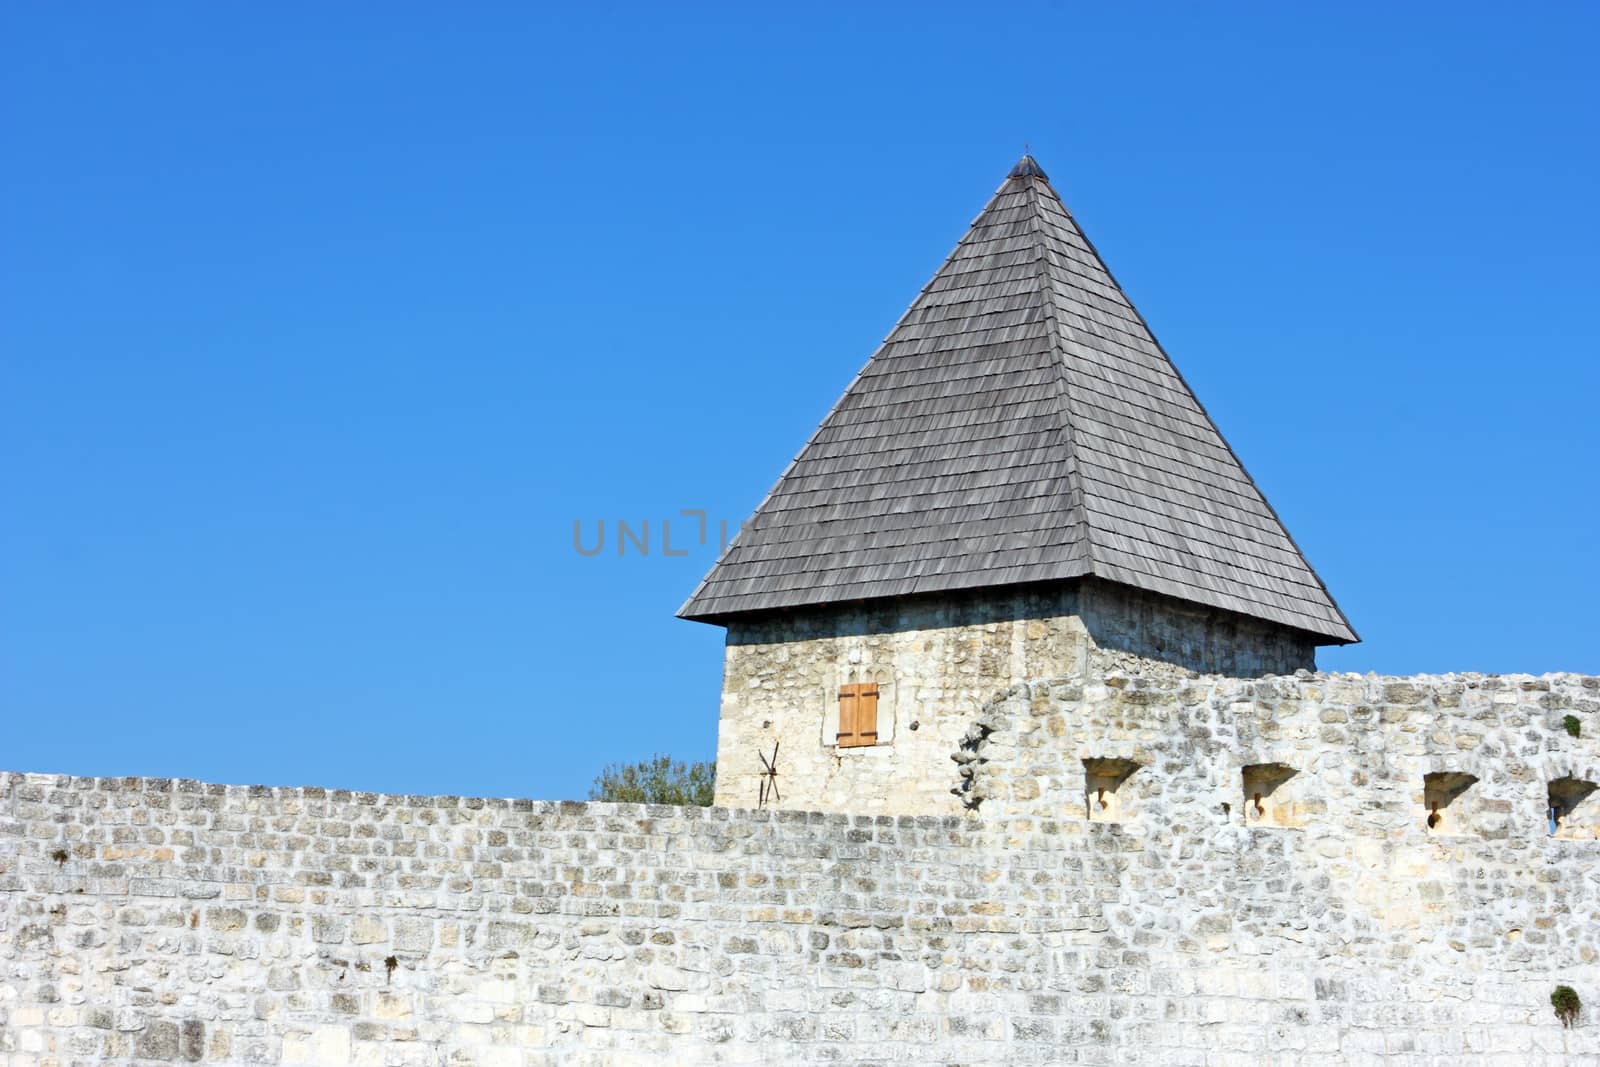 Detail of Zrinski castle, Hrvatska Costajnica, Croatia